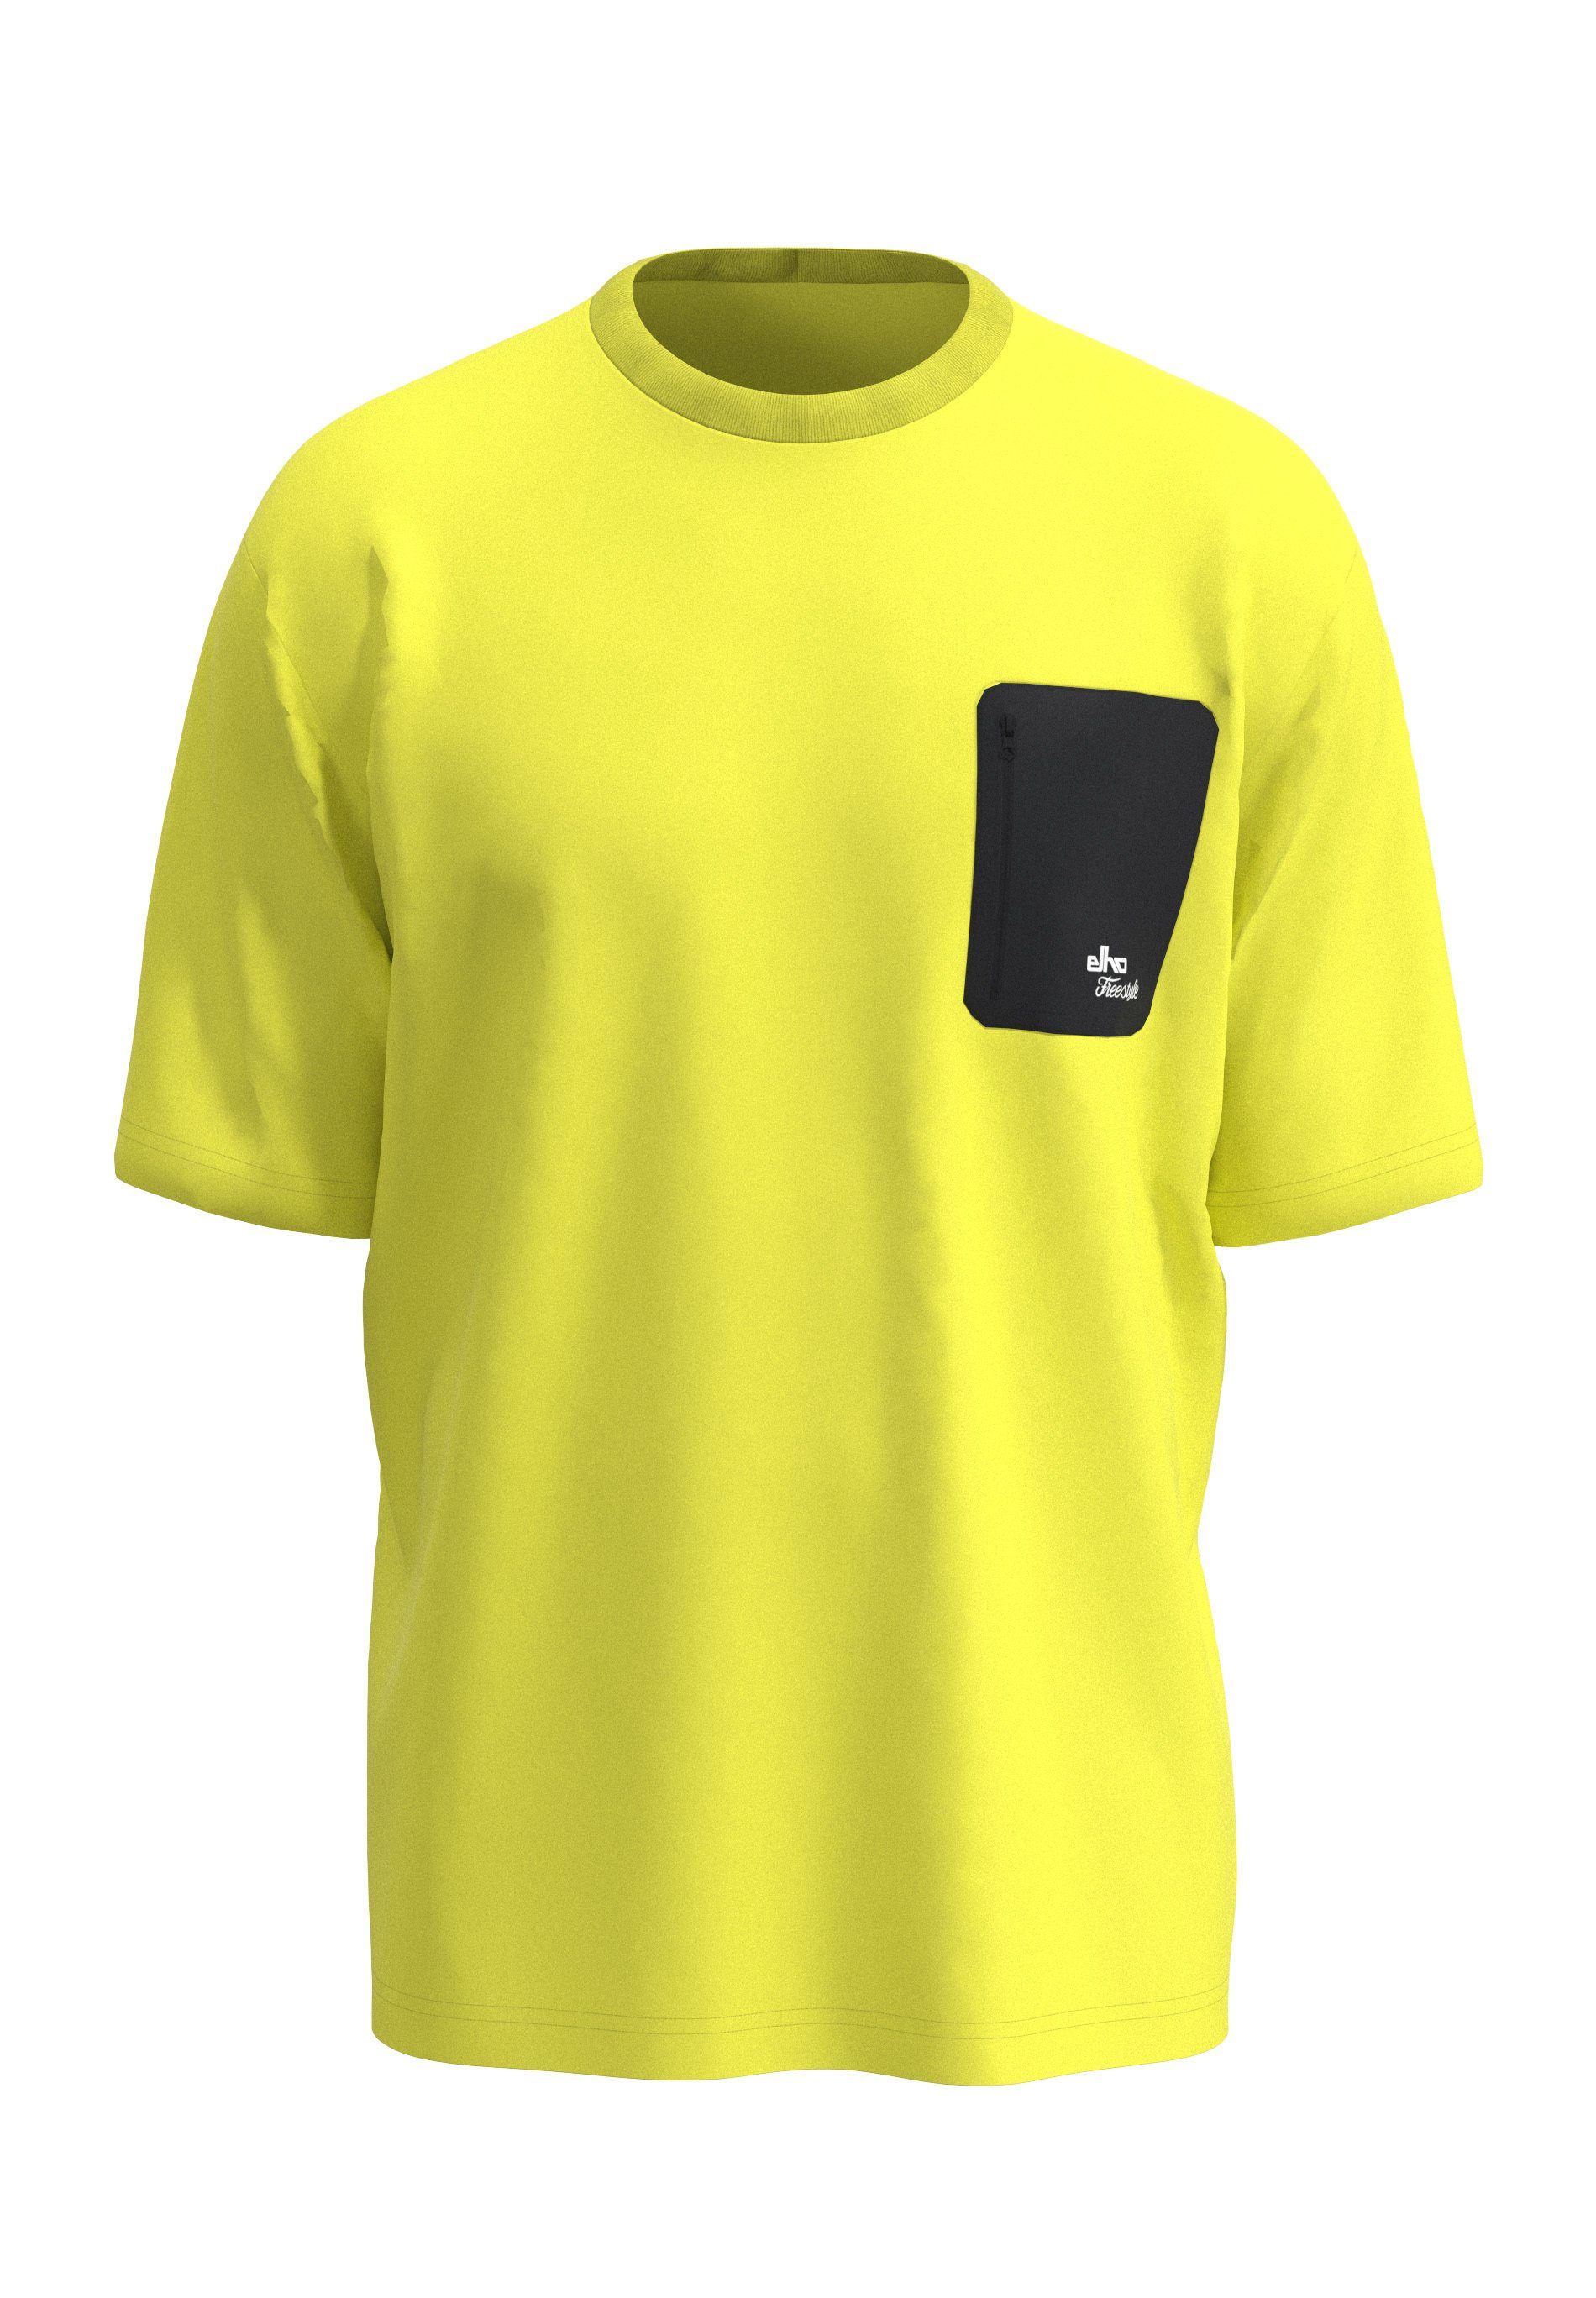 Elho 89 Yellow T-Shirt AMALFI